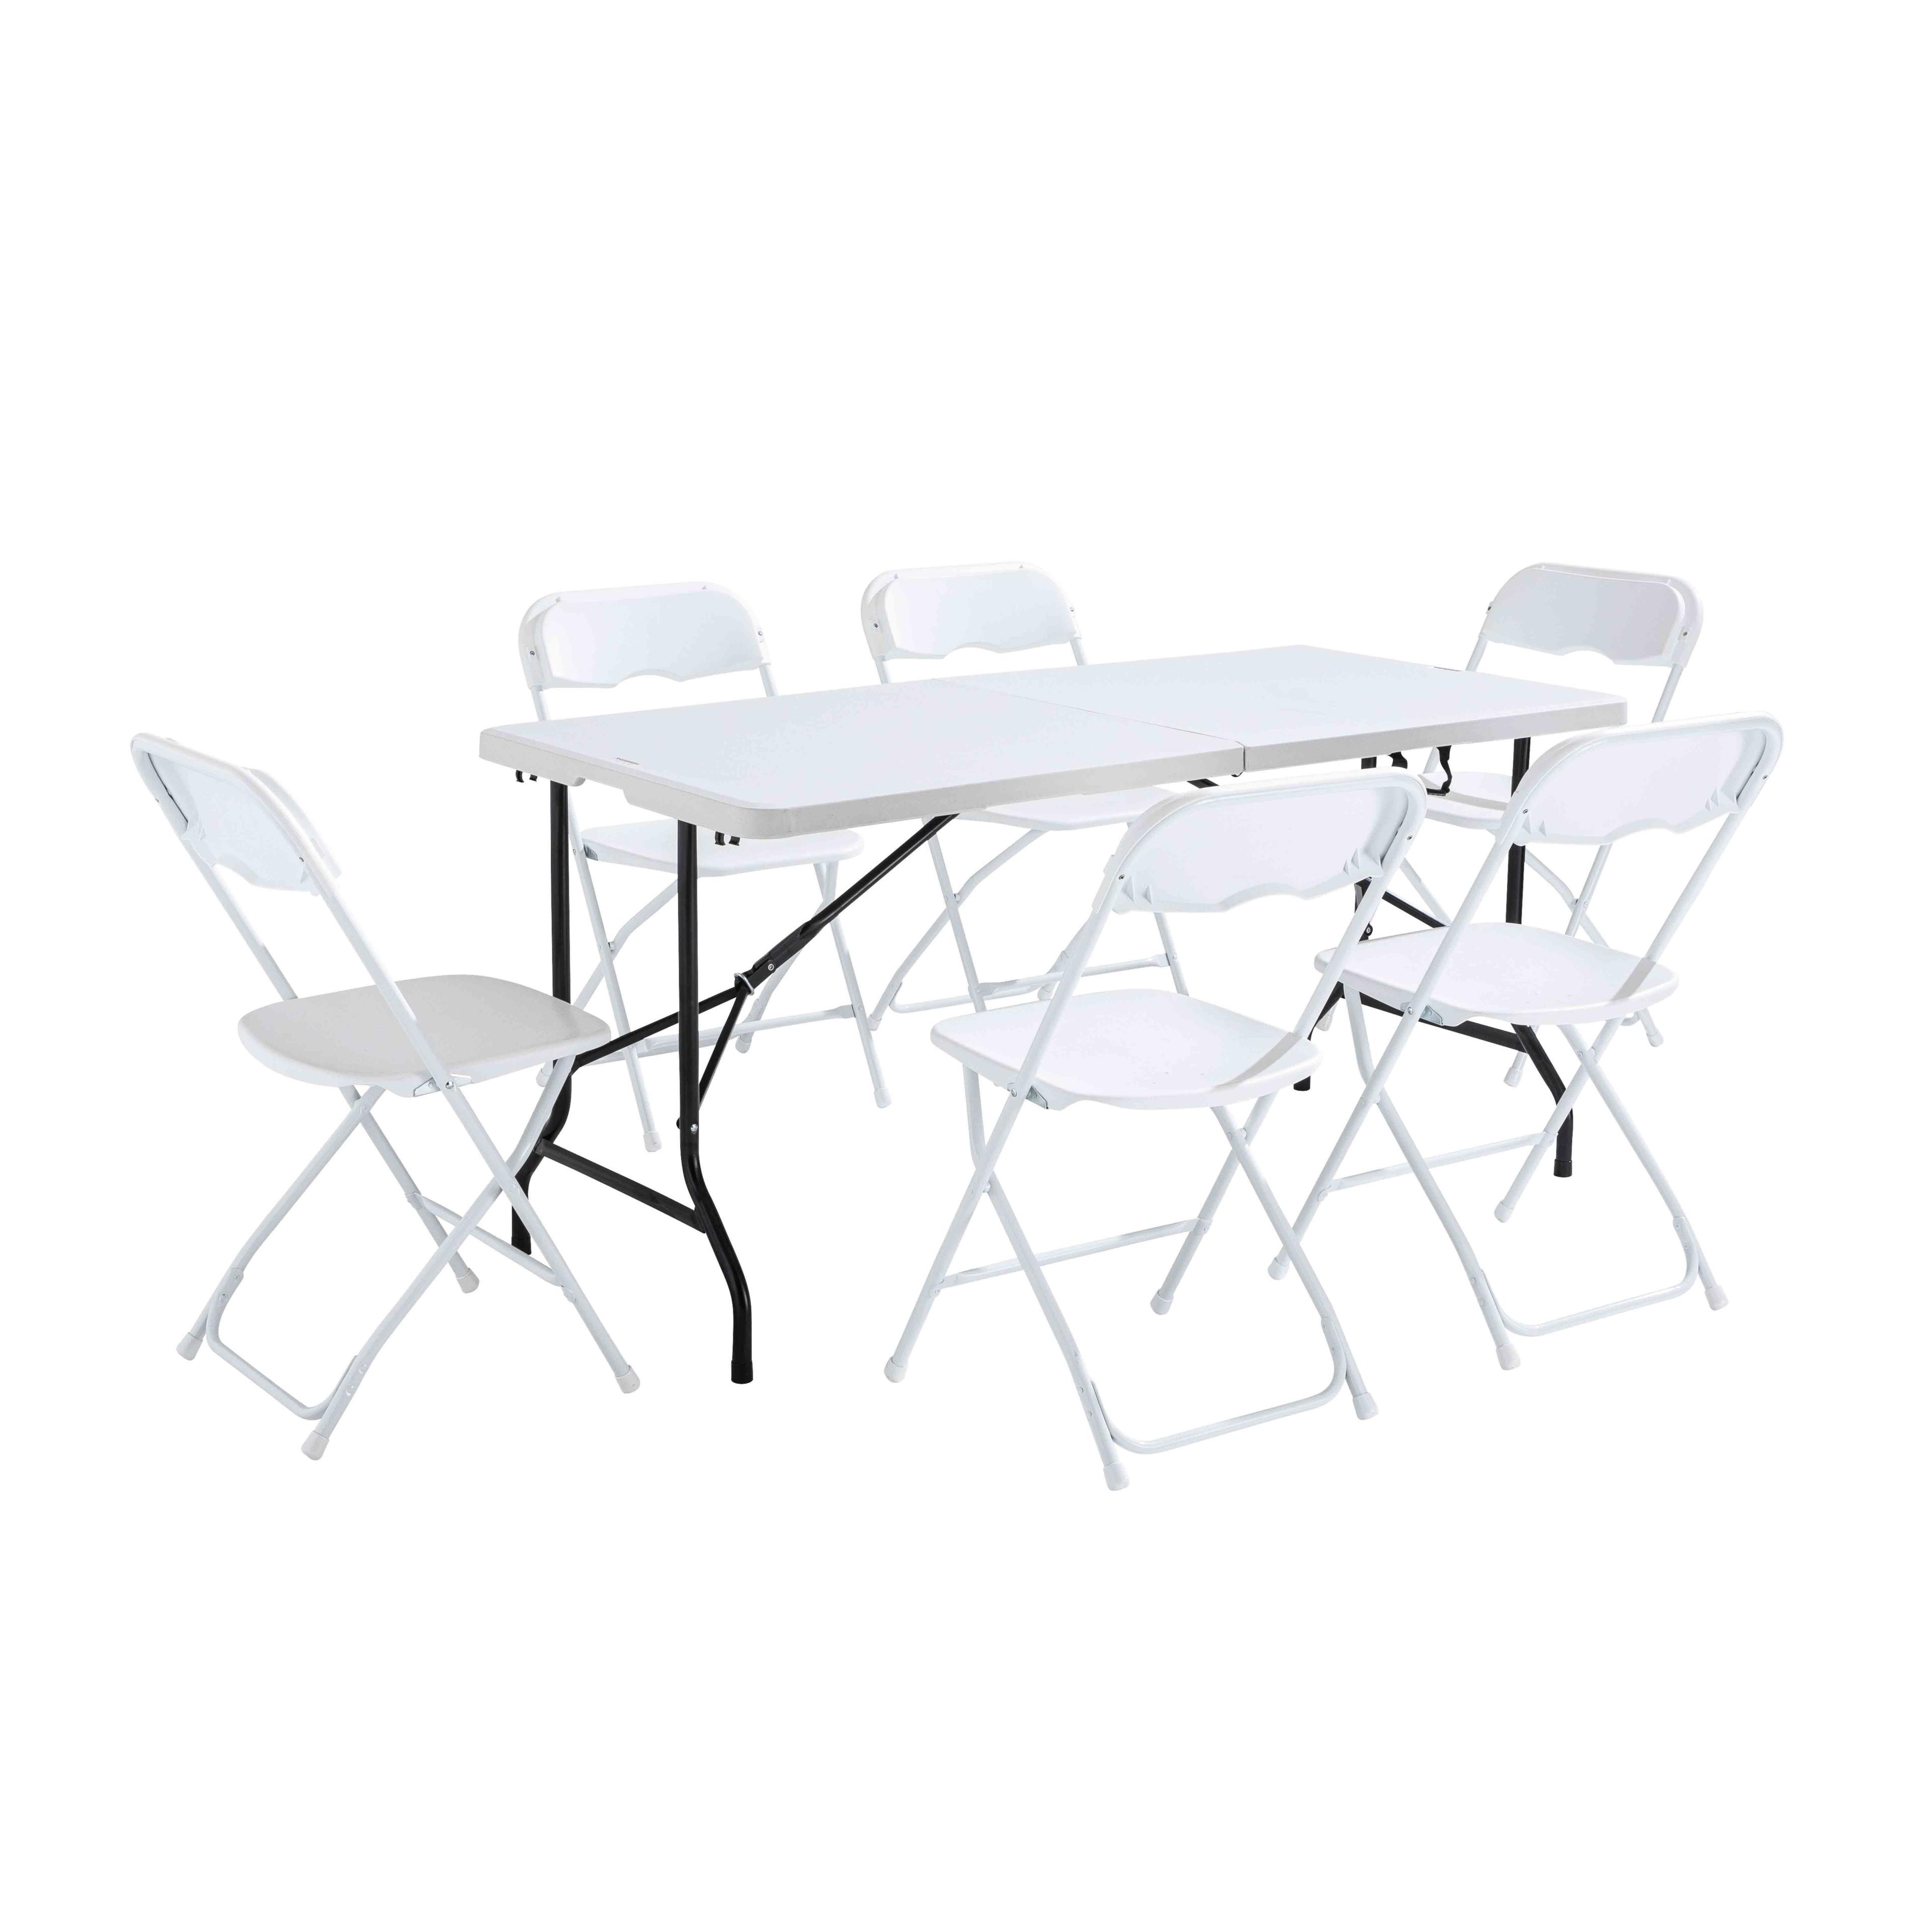 Studio Designs Folding Multi Purpose Sewing Table, White